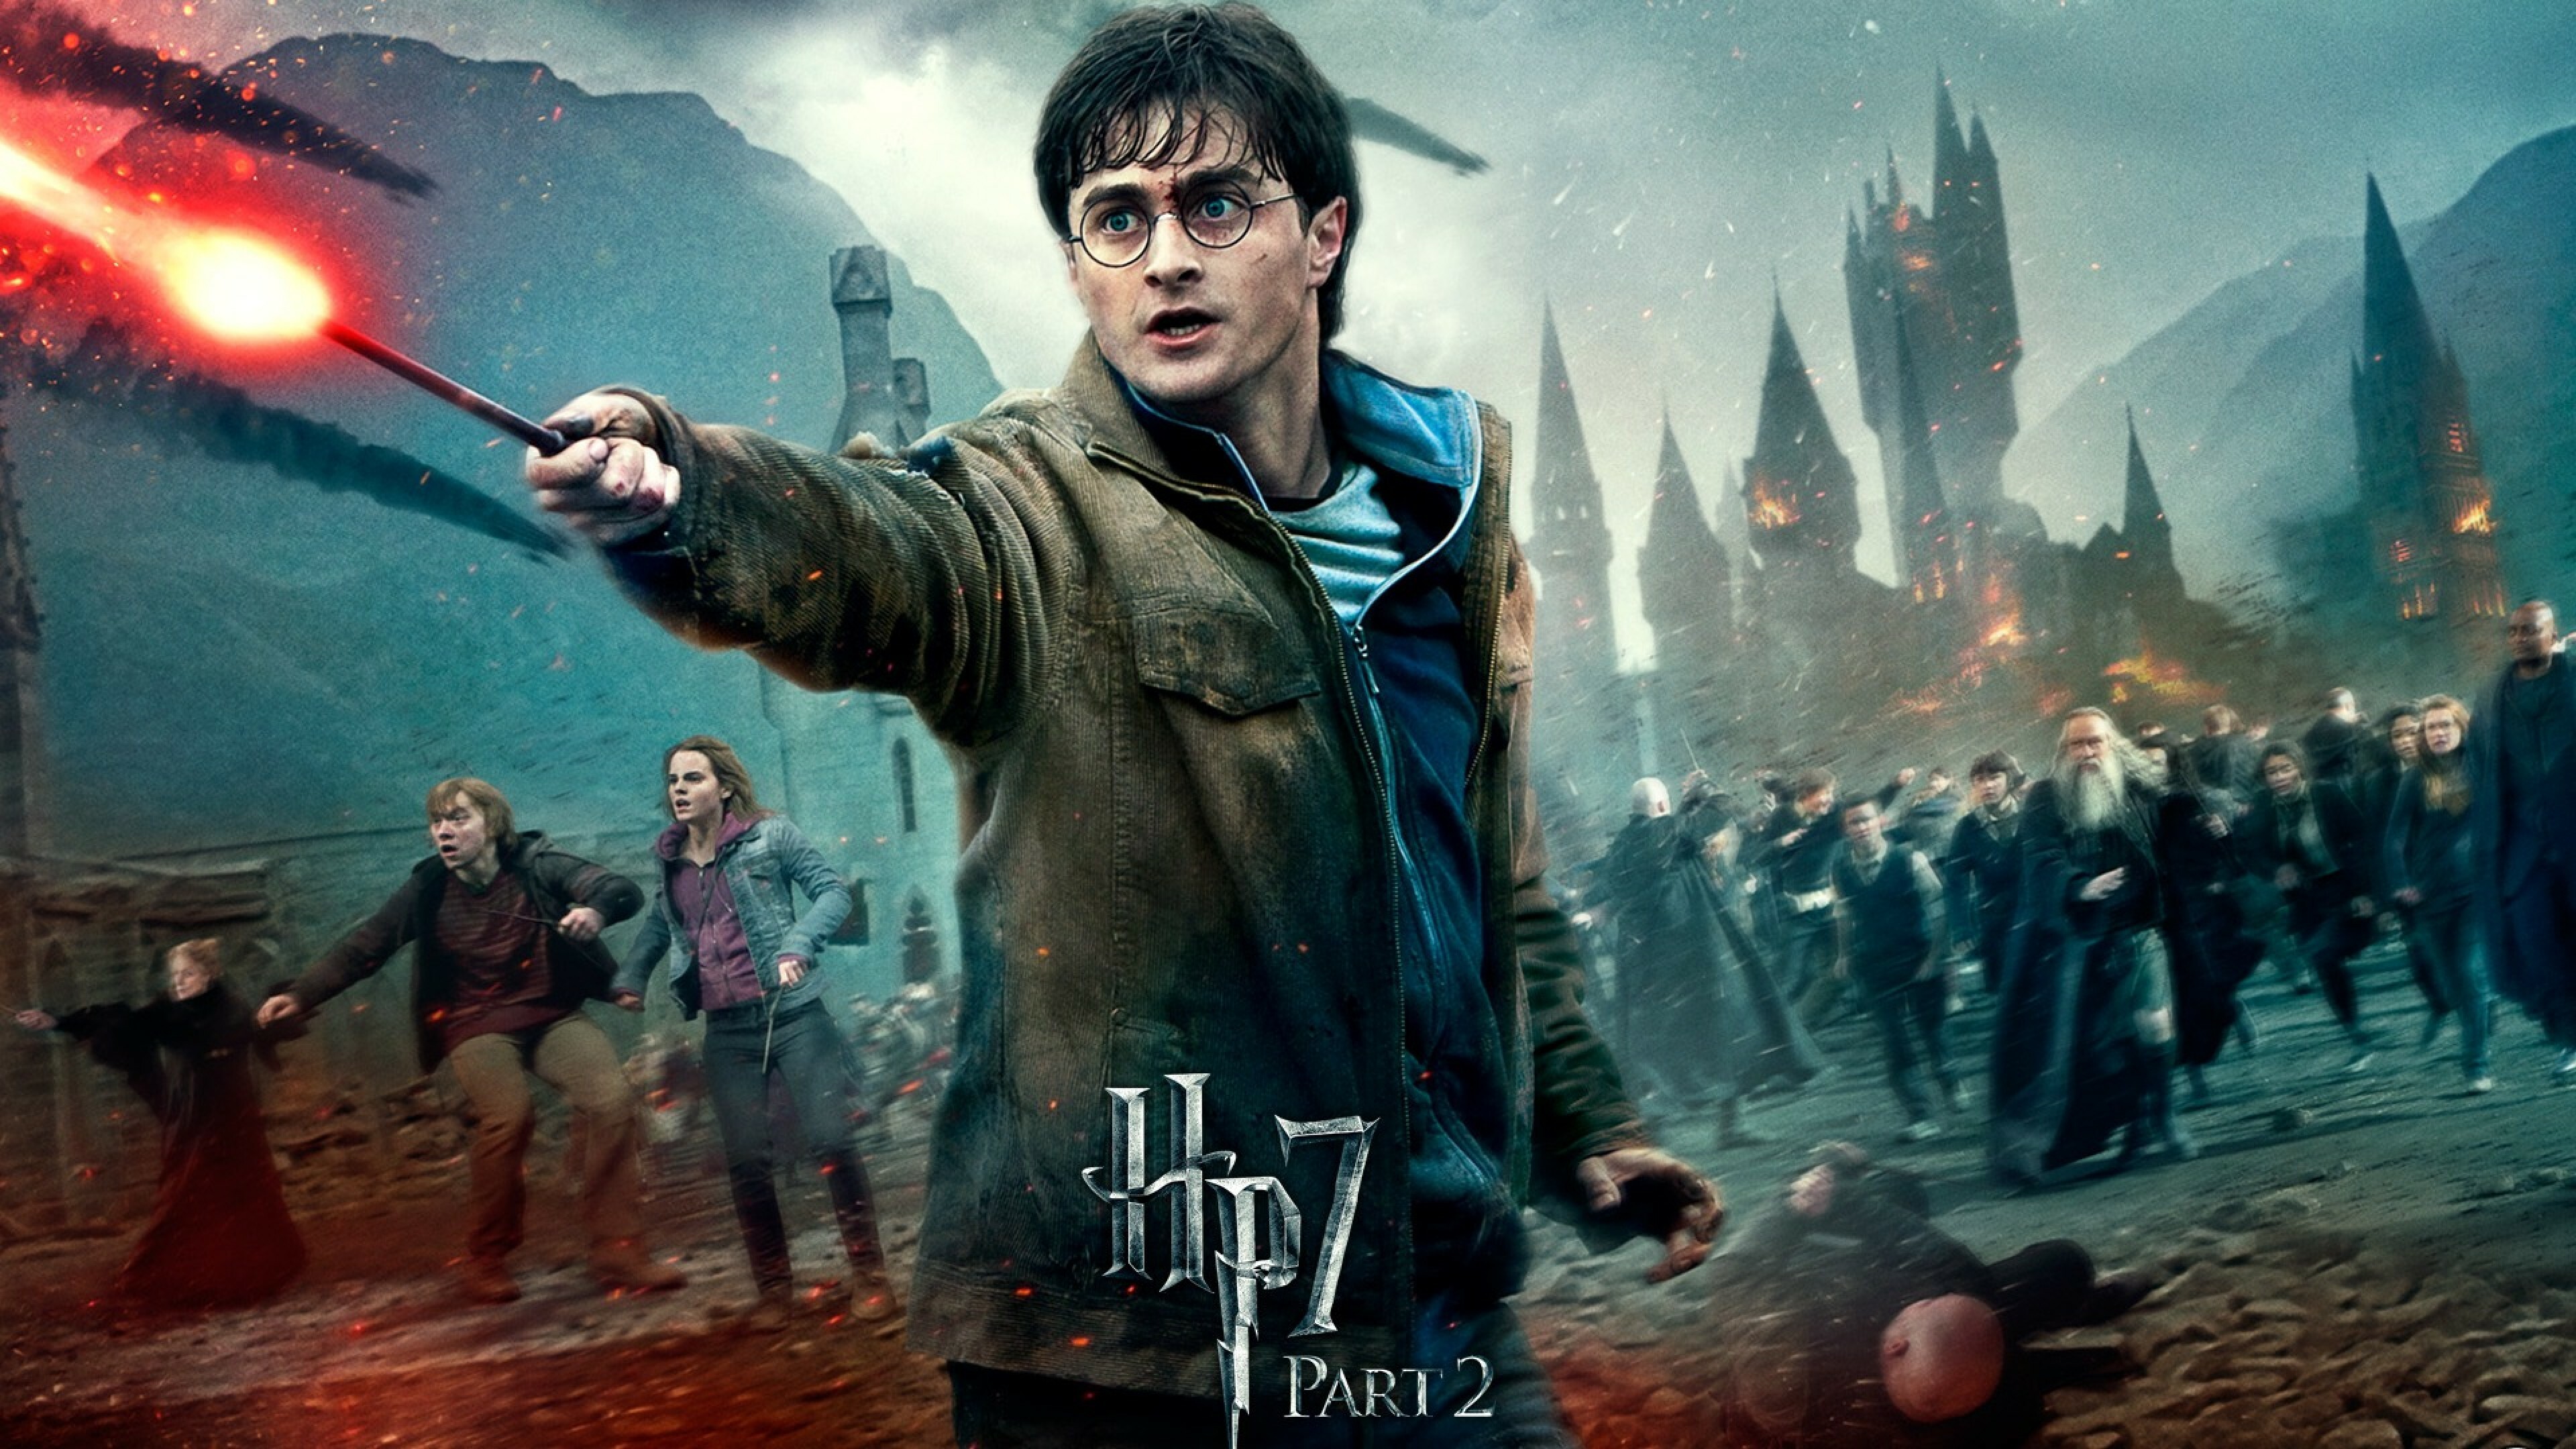 100+] Harry Potter 4k Wallpapers